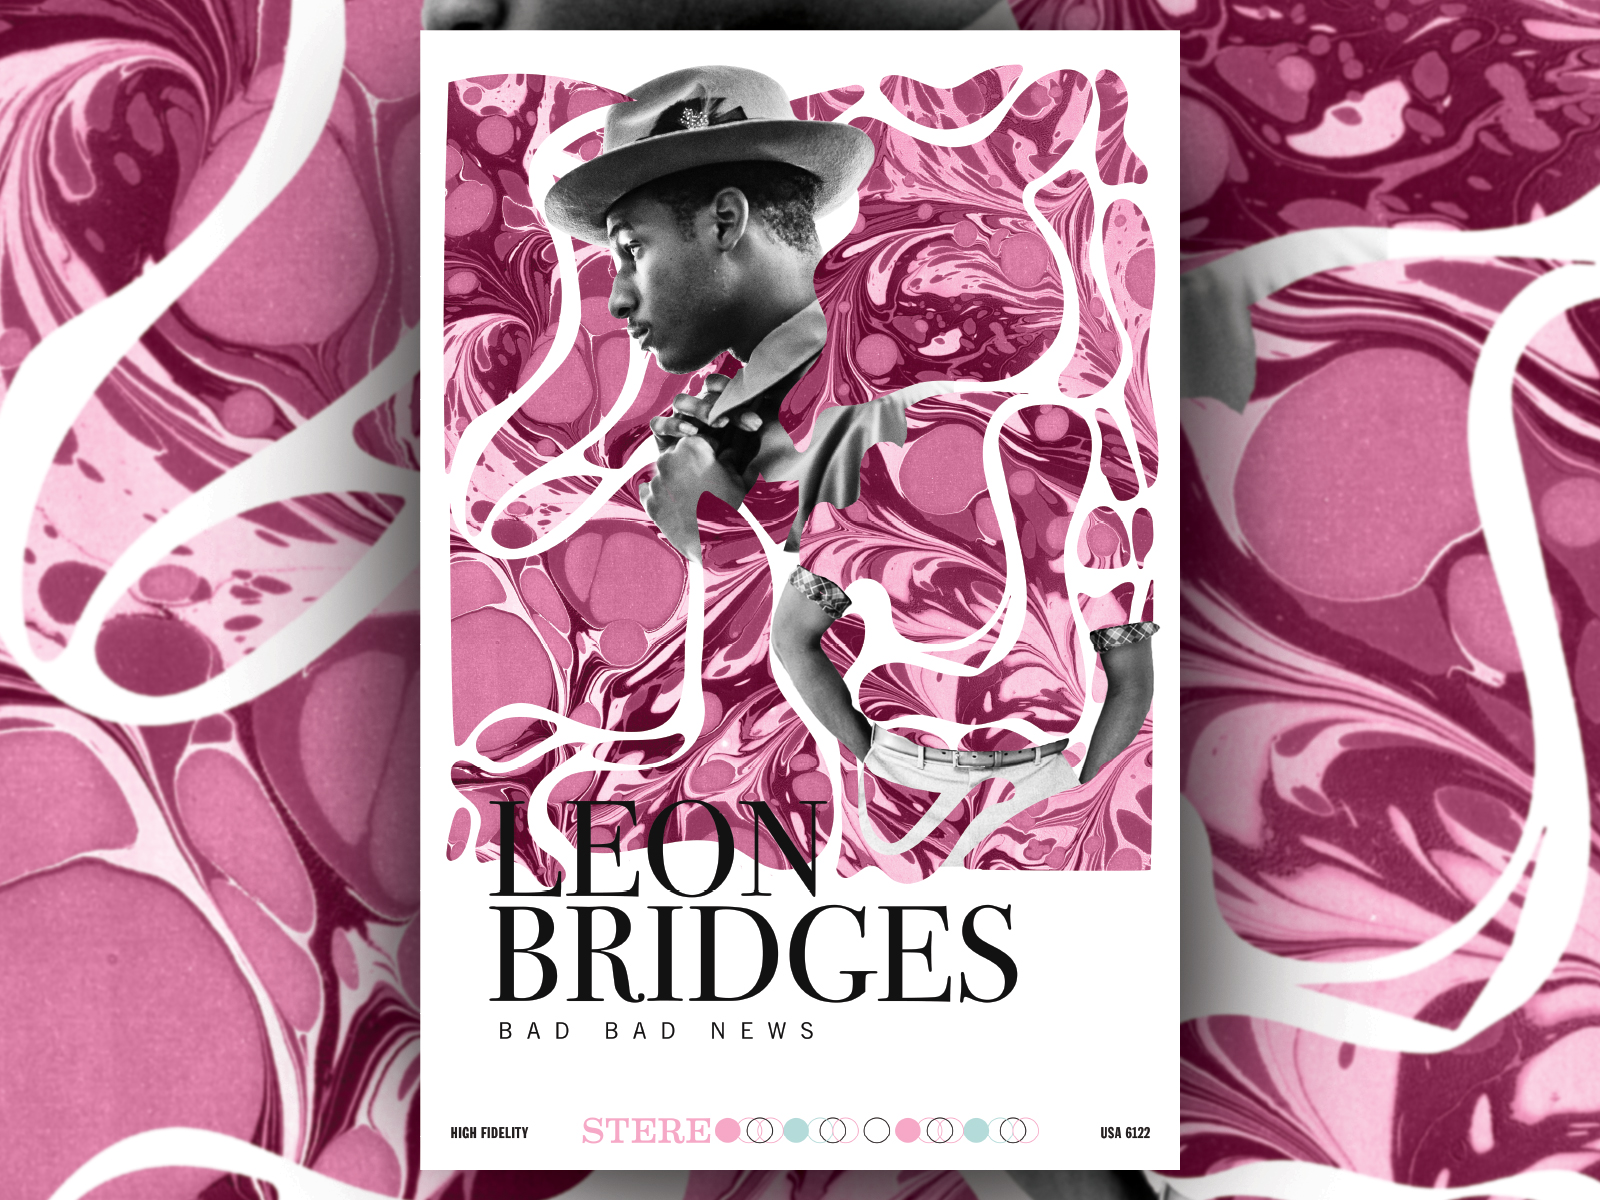 Leon Bridges by Keith Lowe on Dribbble